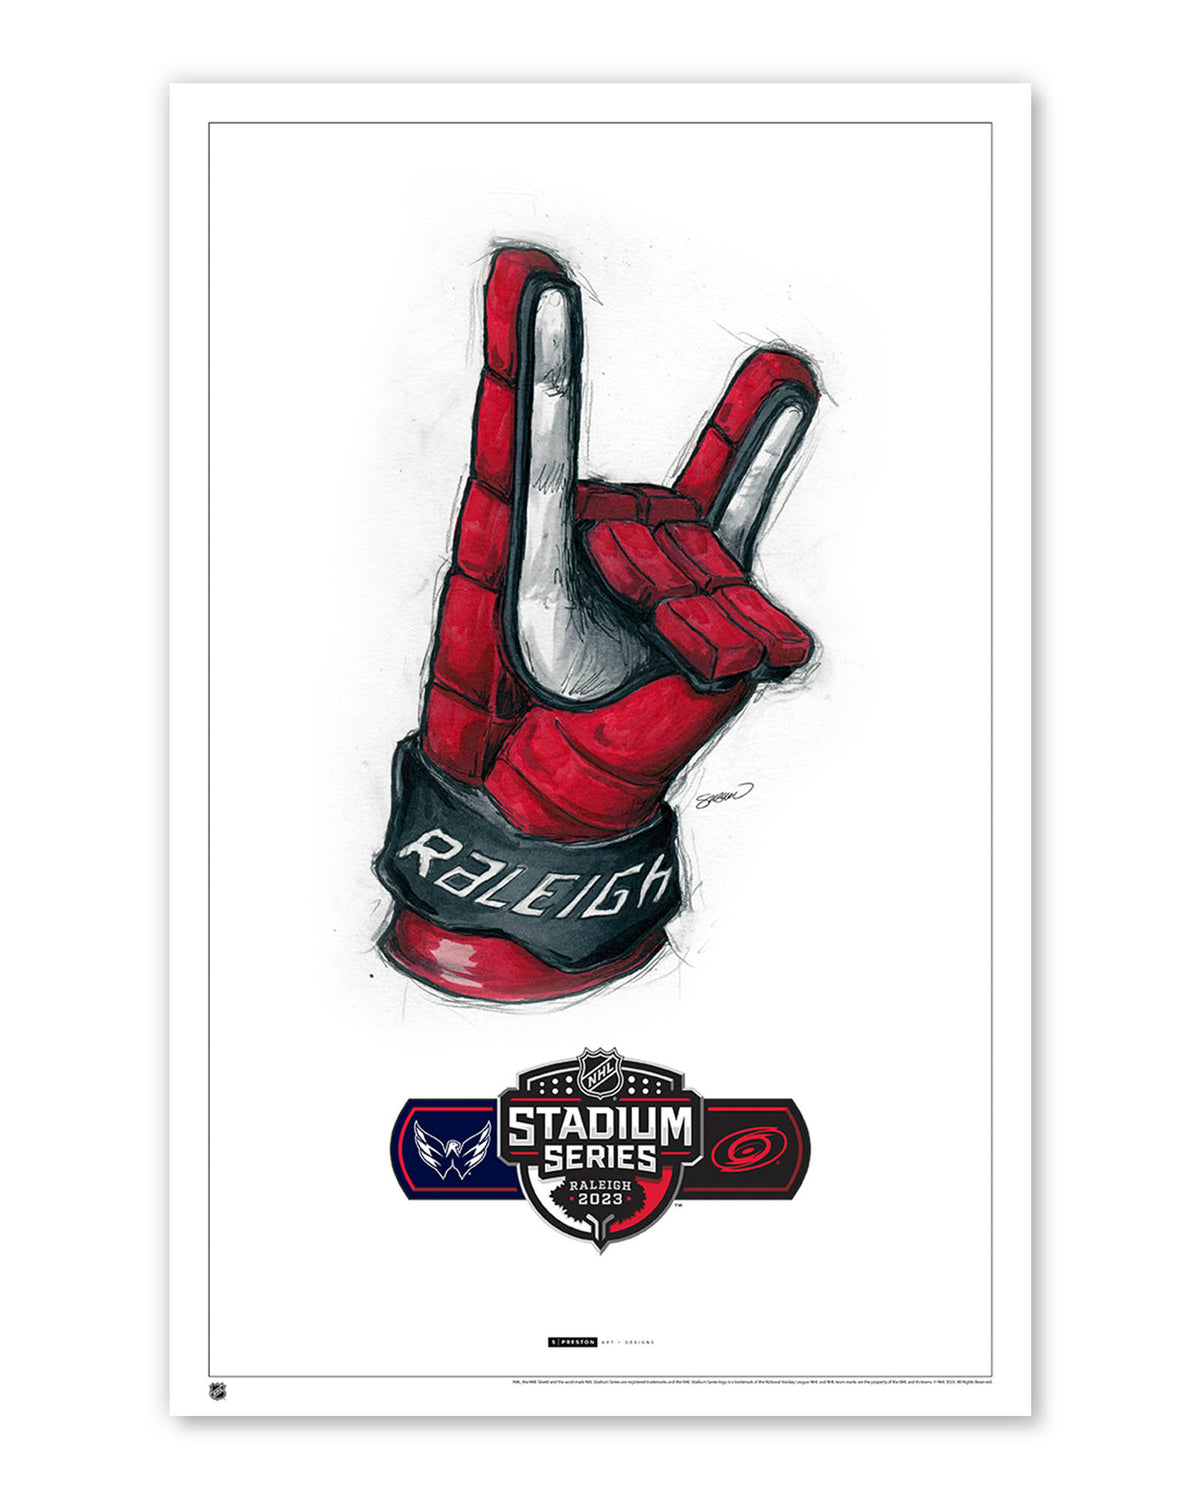 Carolina Hurricanes on X: The Stadium Series logo just dropped